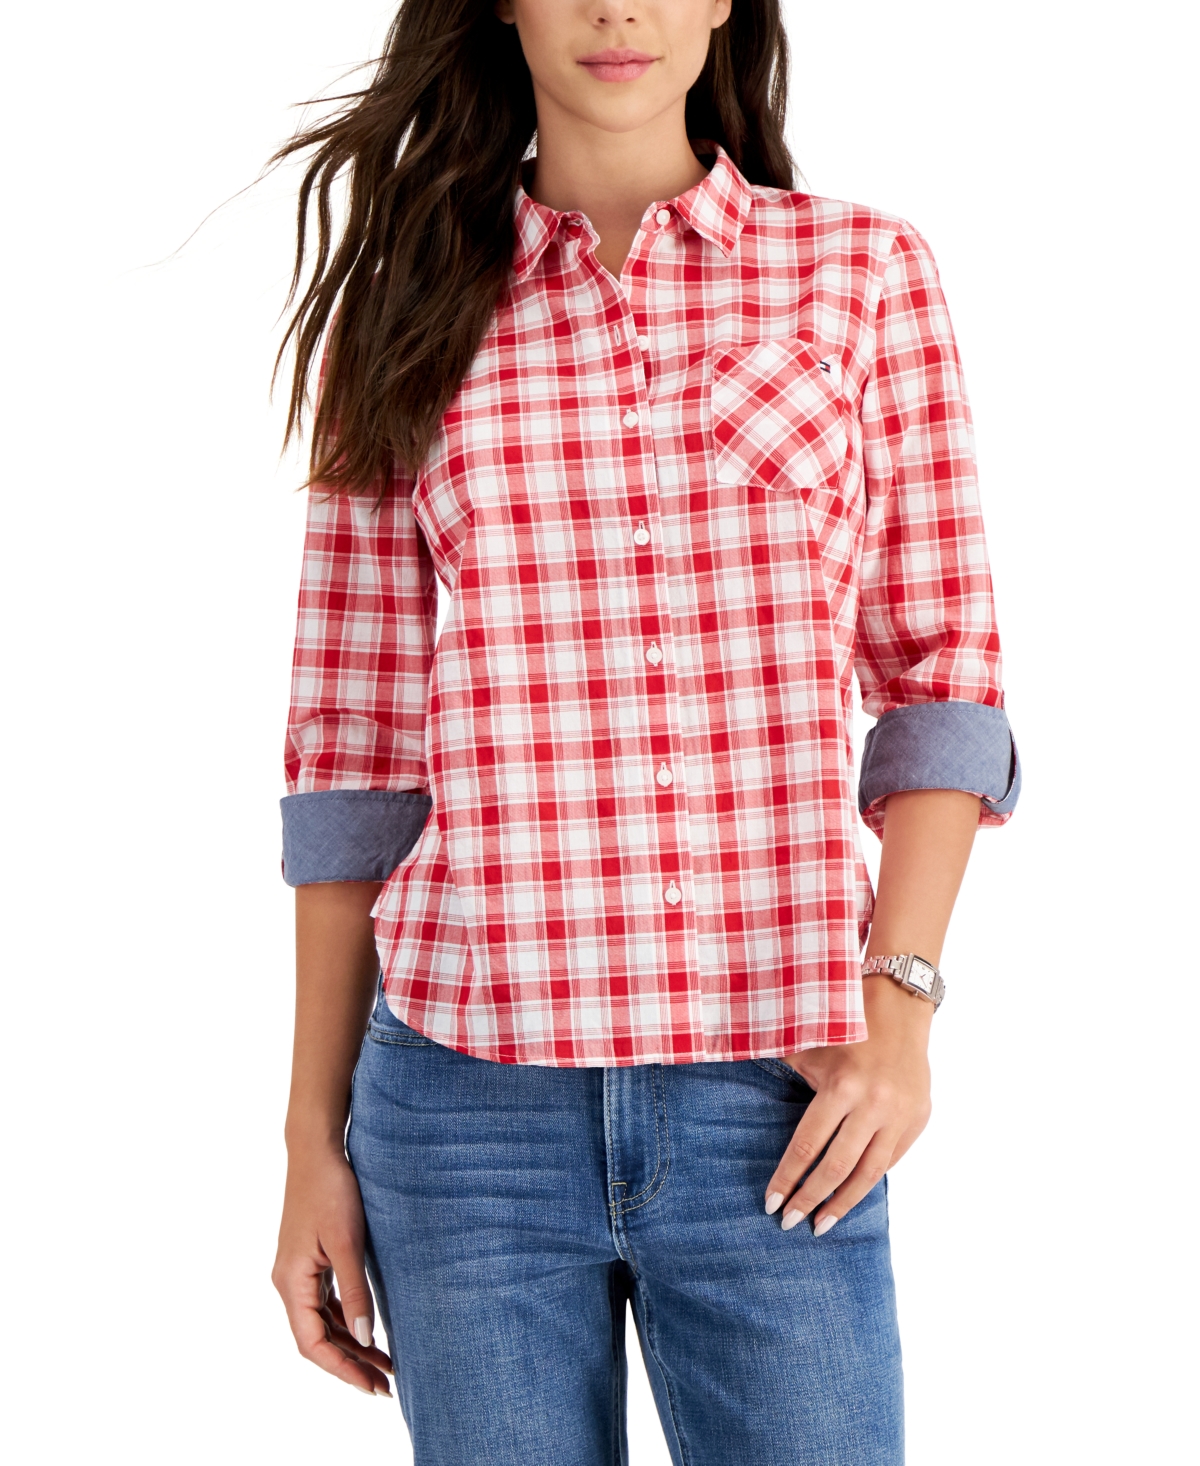 Tommy Hilfiger Women's Cotton Plaid Roll-Tab Shirt